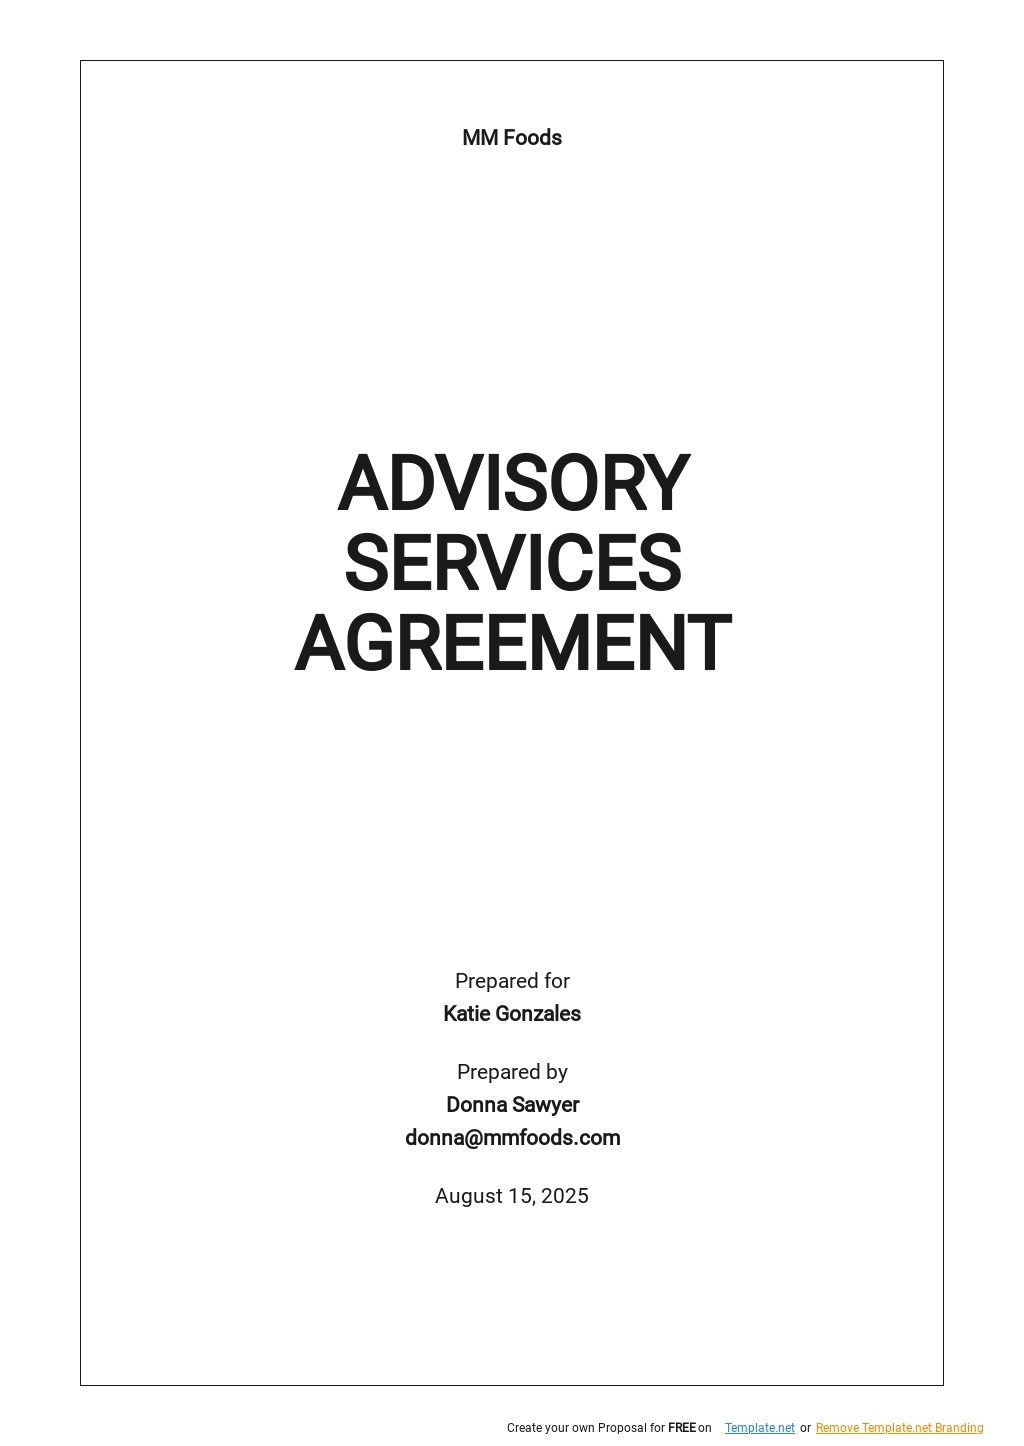 Advisory Services Agreement Template.jpe